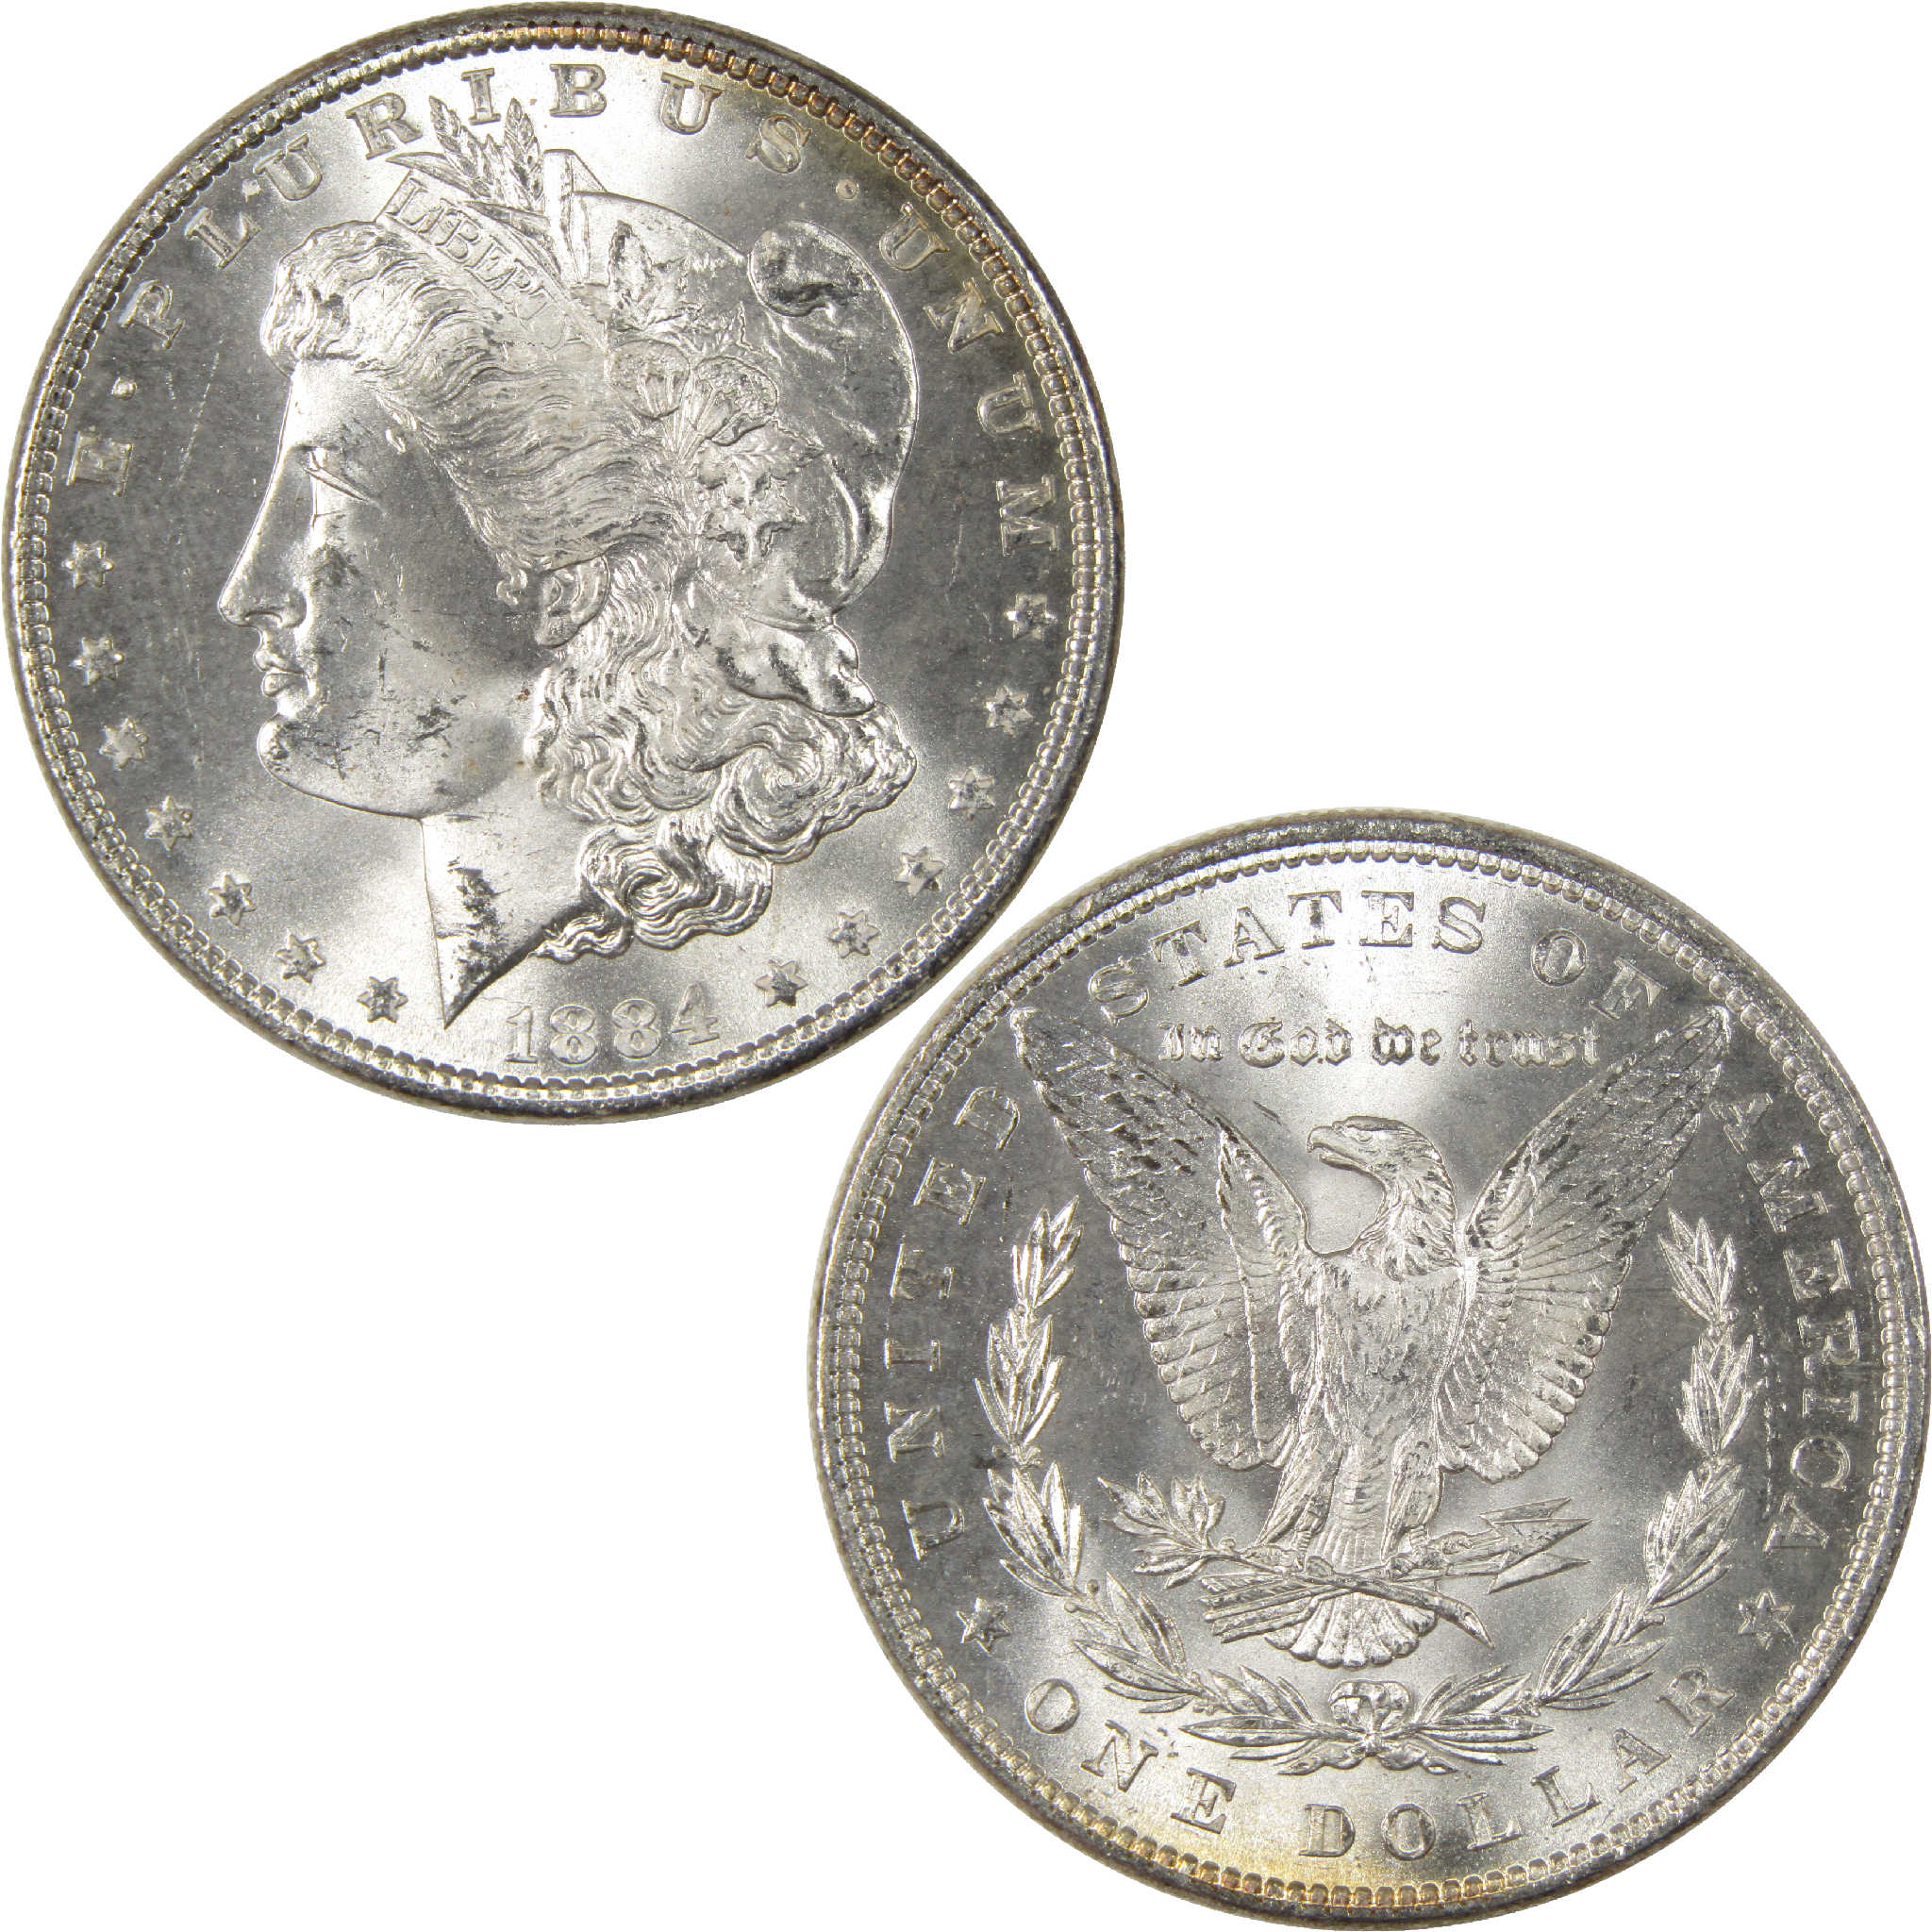 1884 Morgan Dollar BU Choice Uncirculated Silver $1 Coin - Morgan coin - Morgan silver dollar - Morgan silver dollar for sale - Profile Coins &amp; Collectibles